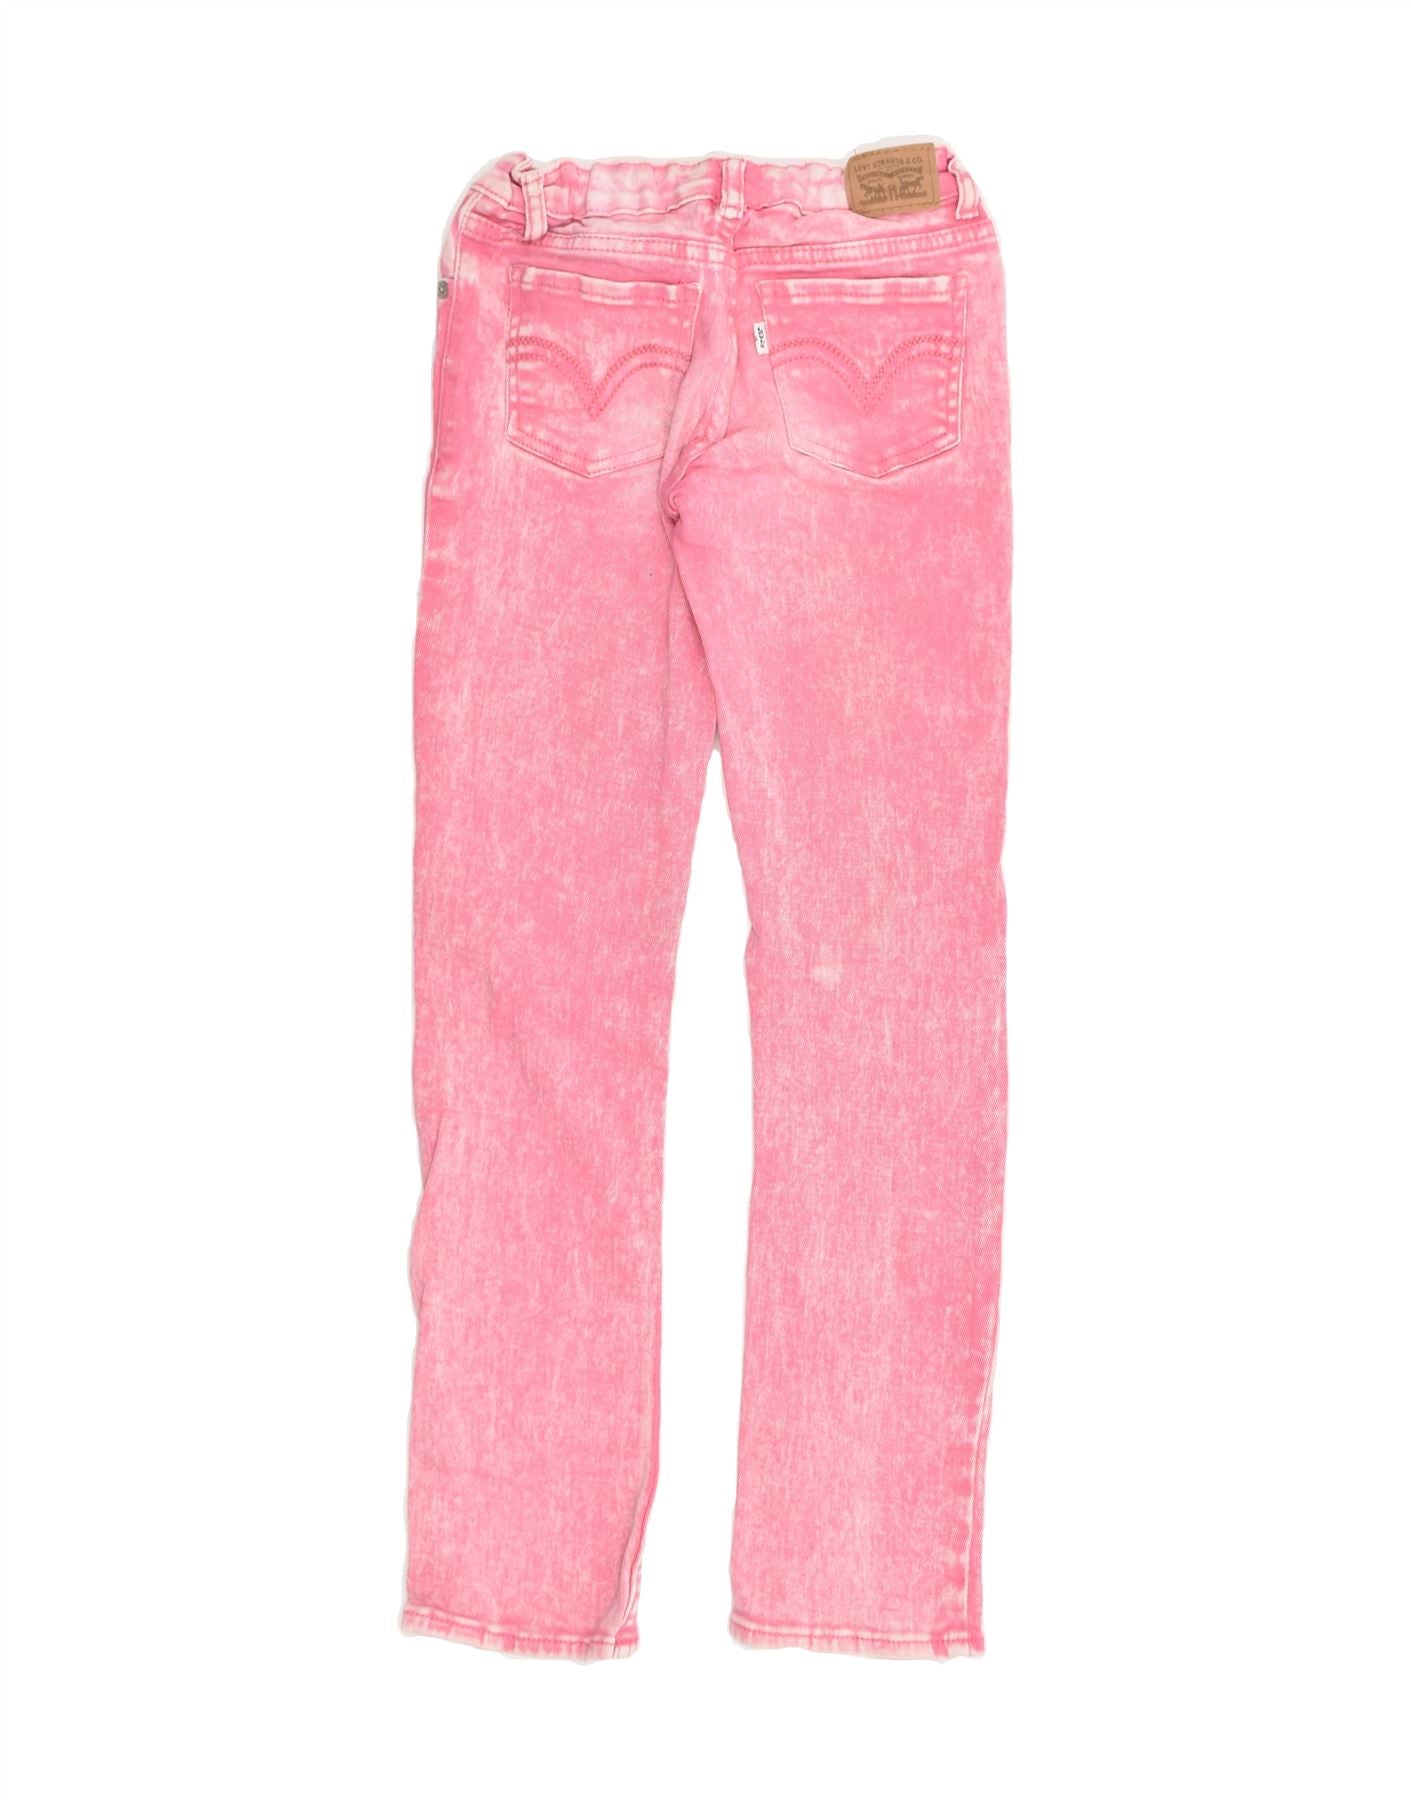 Vintage Levi’s Pink Tie-Dye Jean